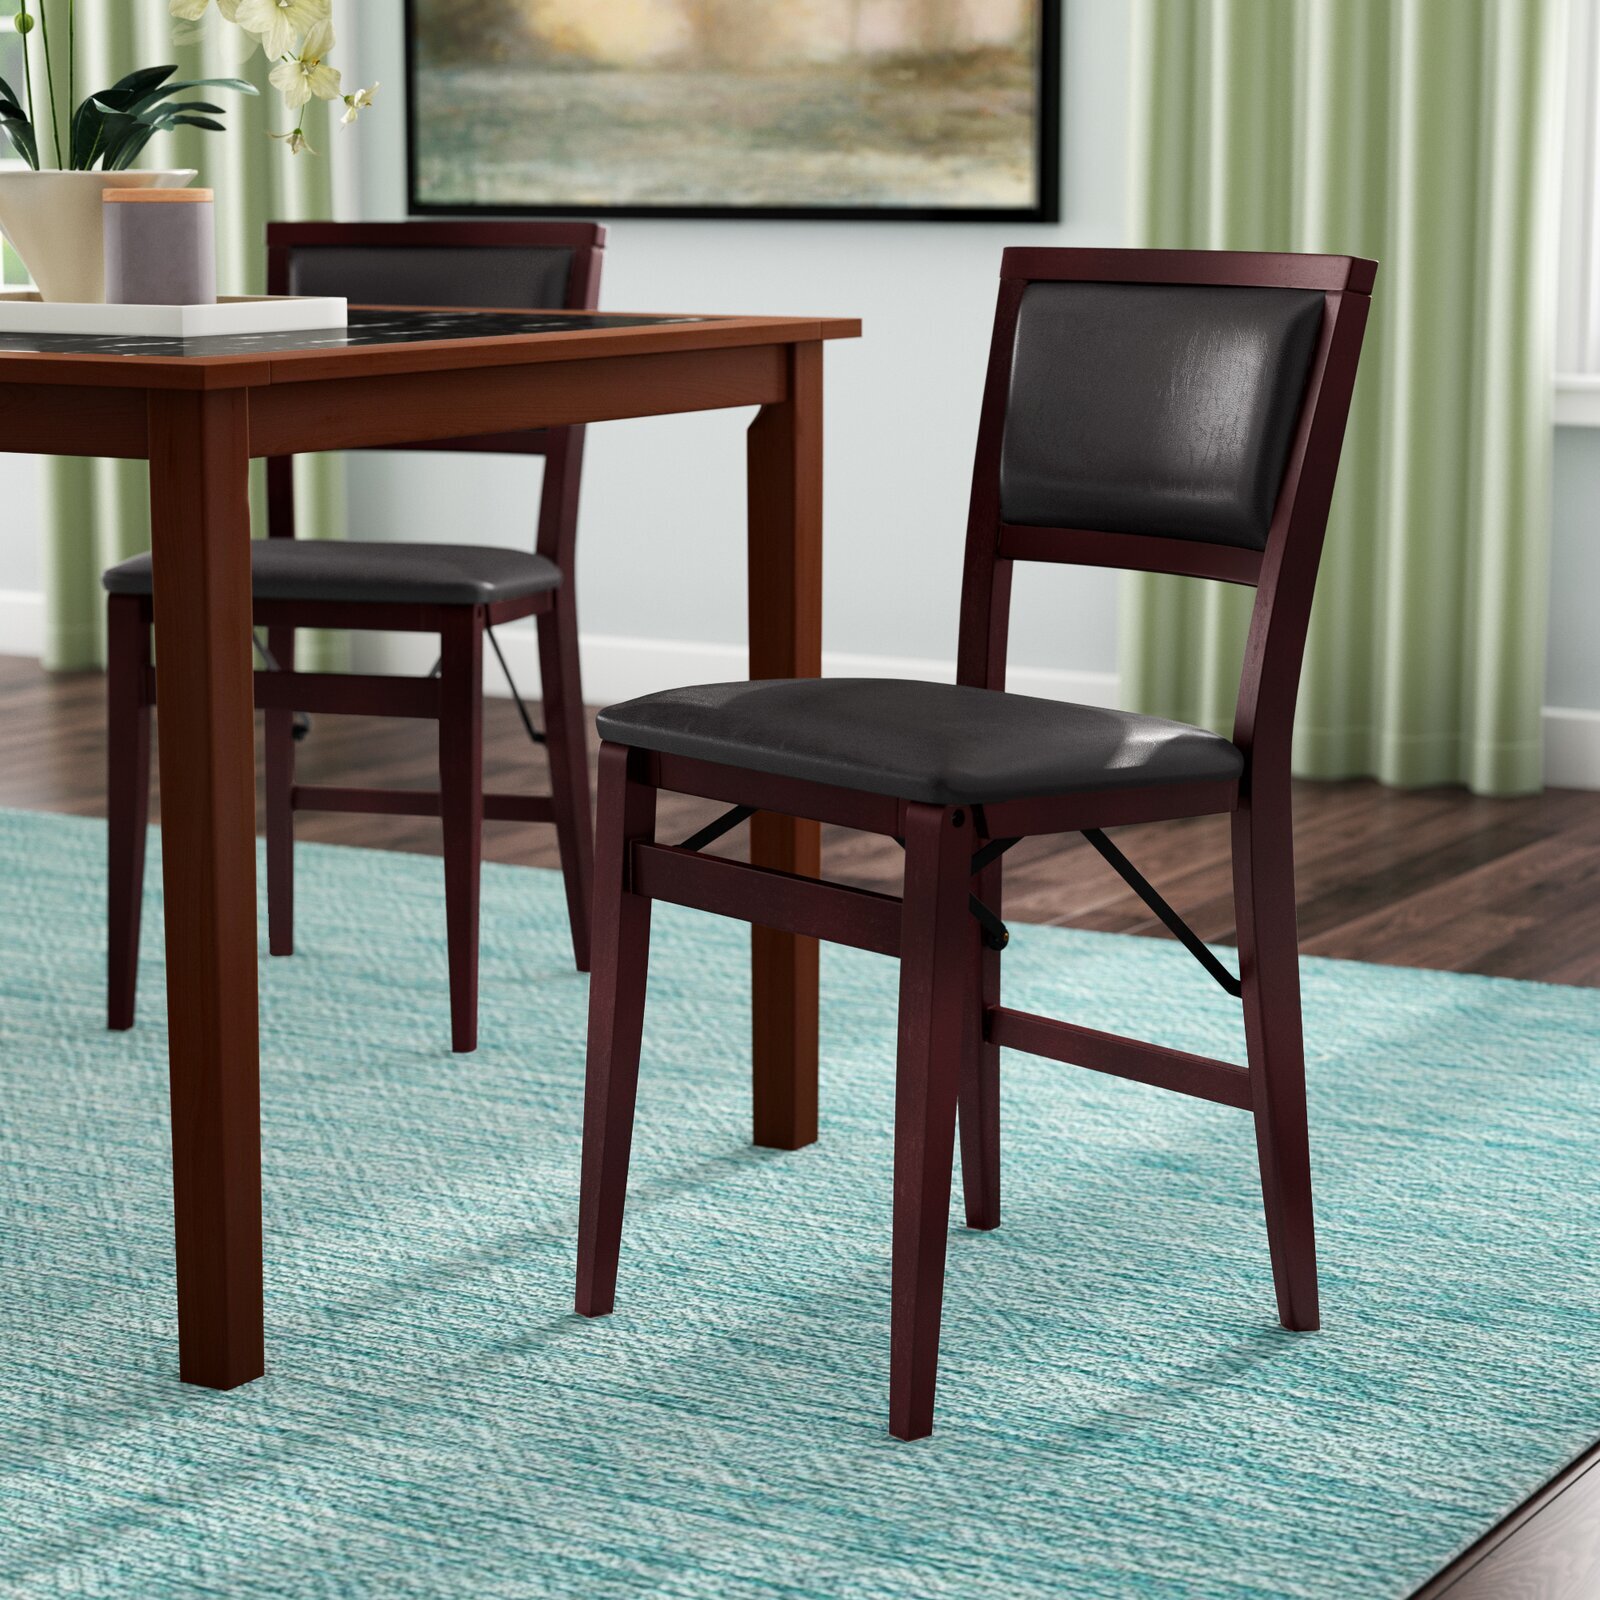 Luxury folding dining chairs